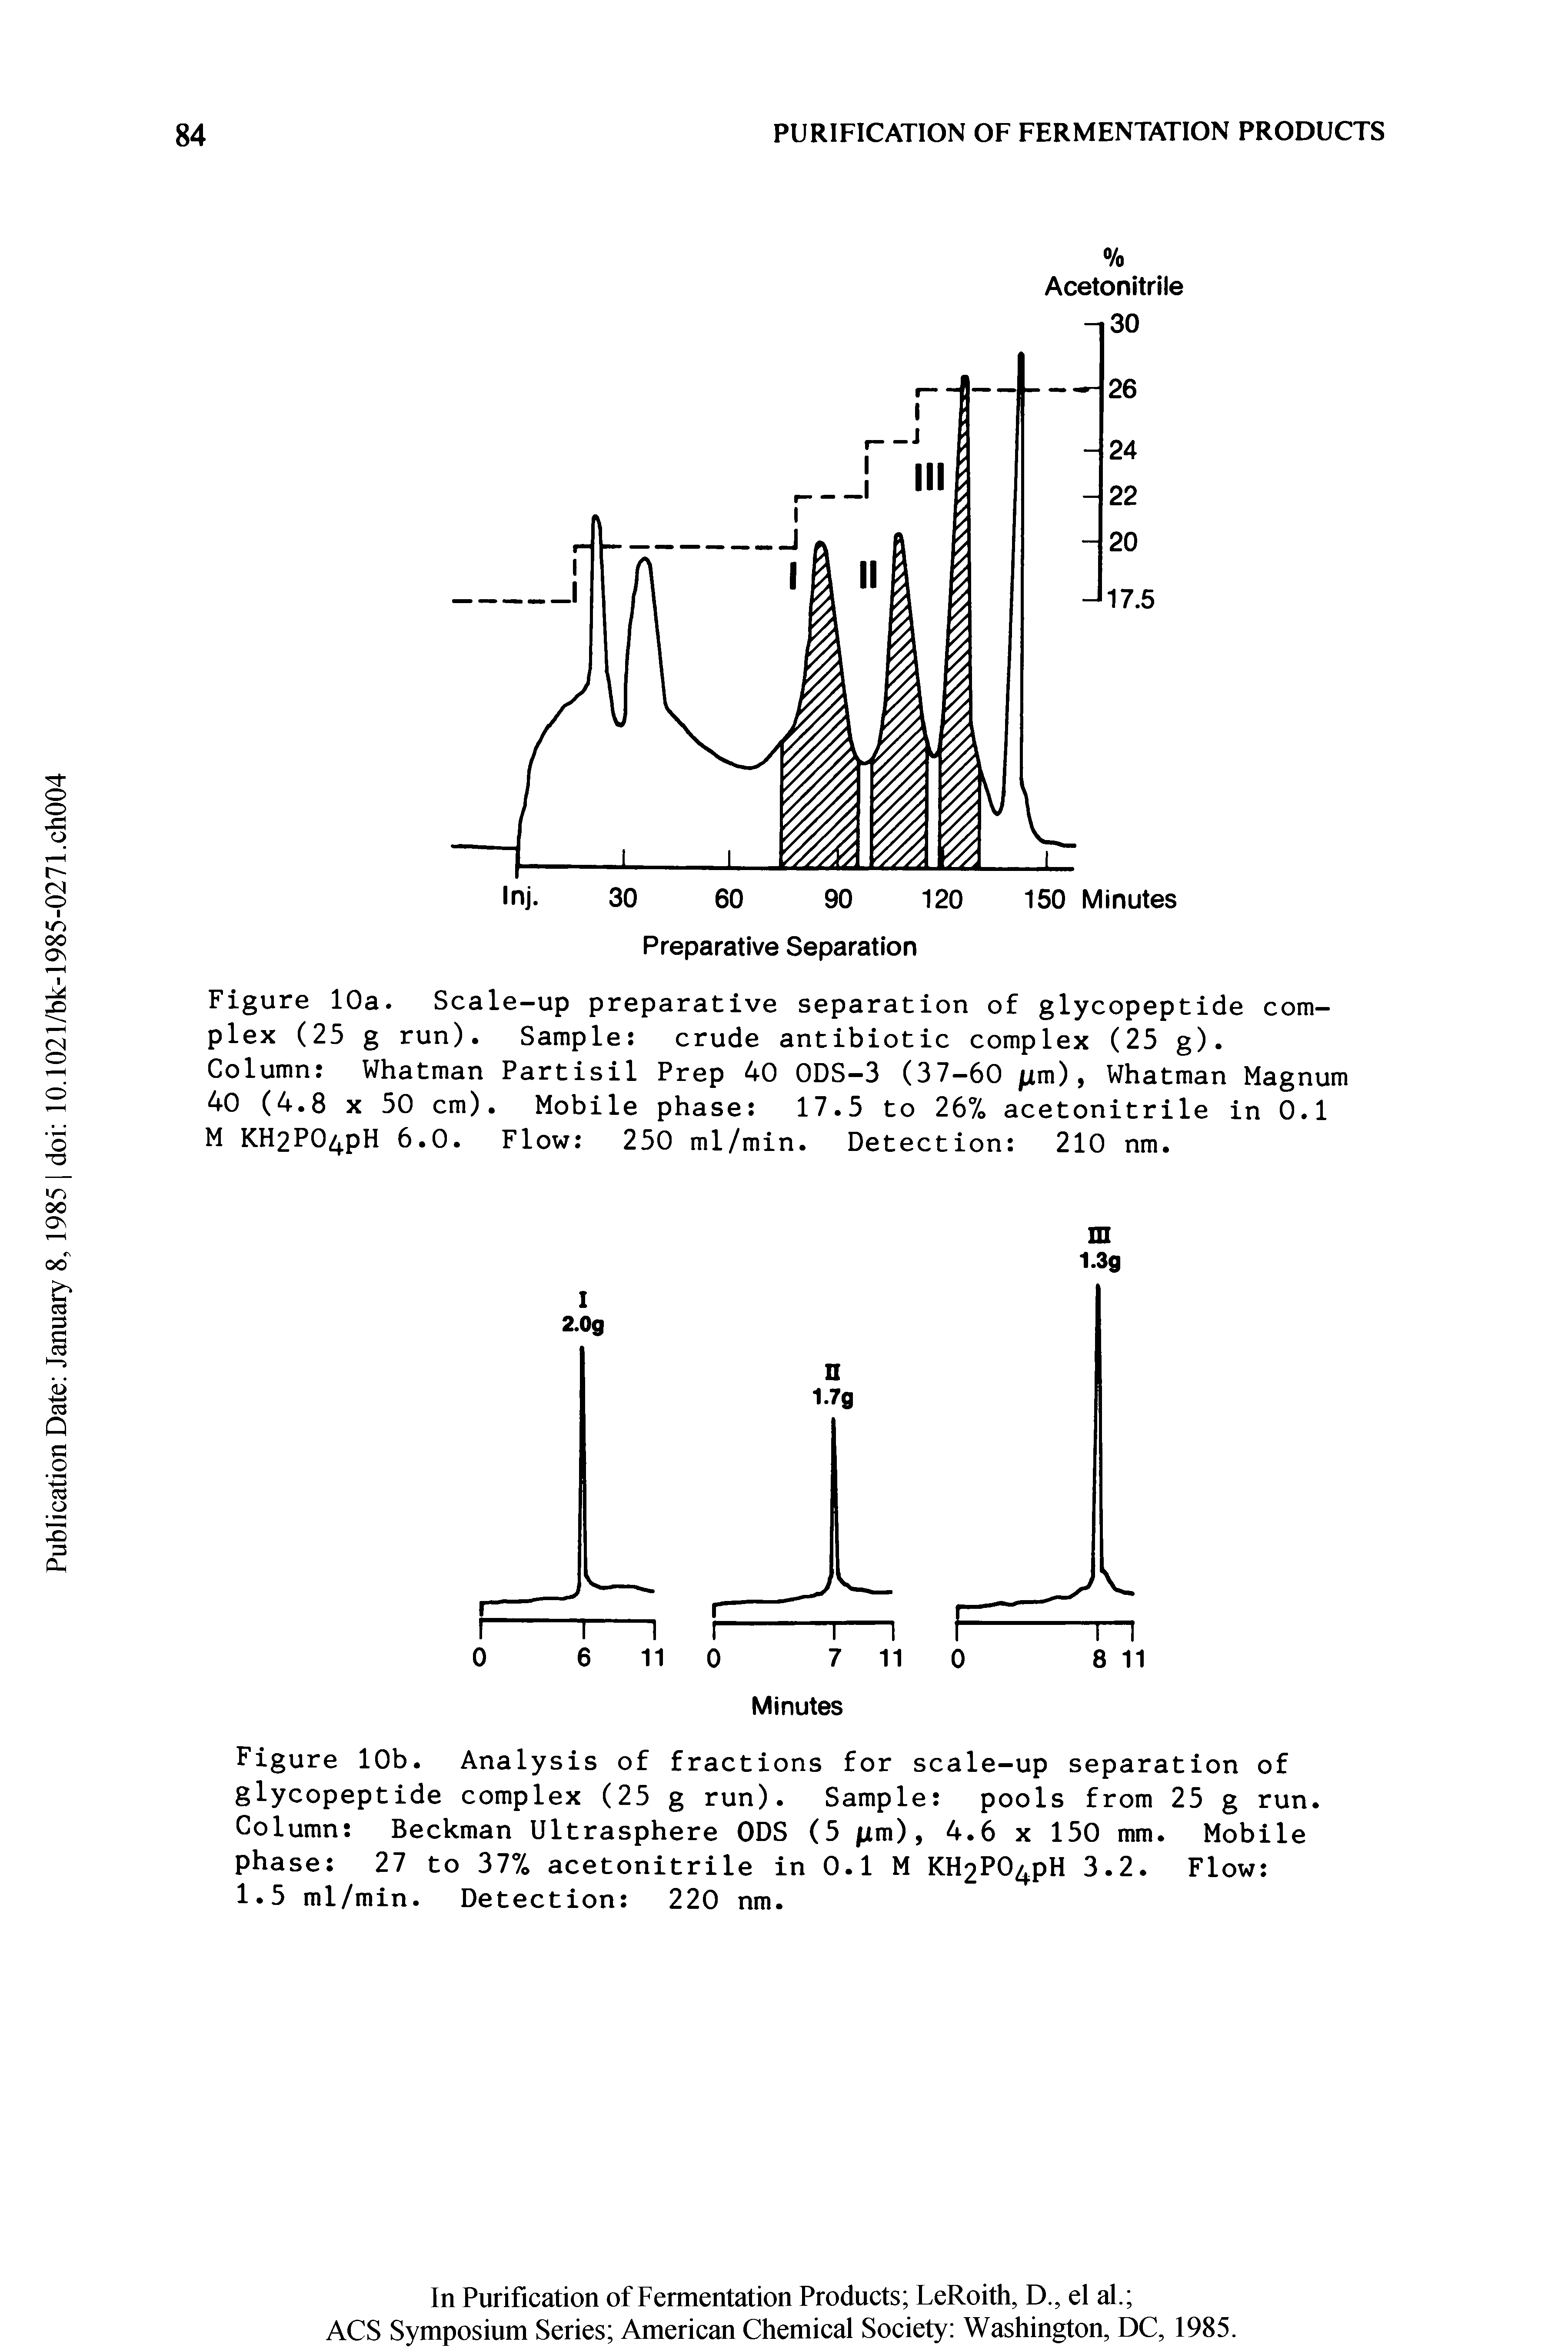 Figure 10a. Scale-up preparative separation of glycopeptide complex (25 g run). Sample crude antibiotic complex (25 g).